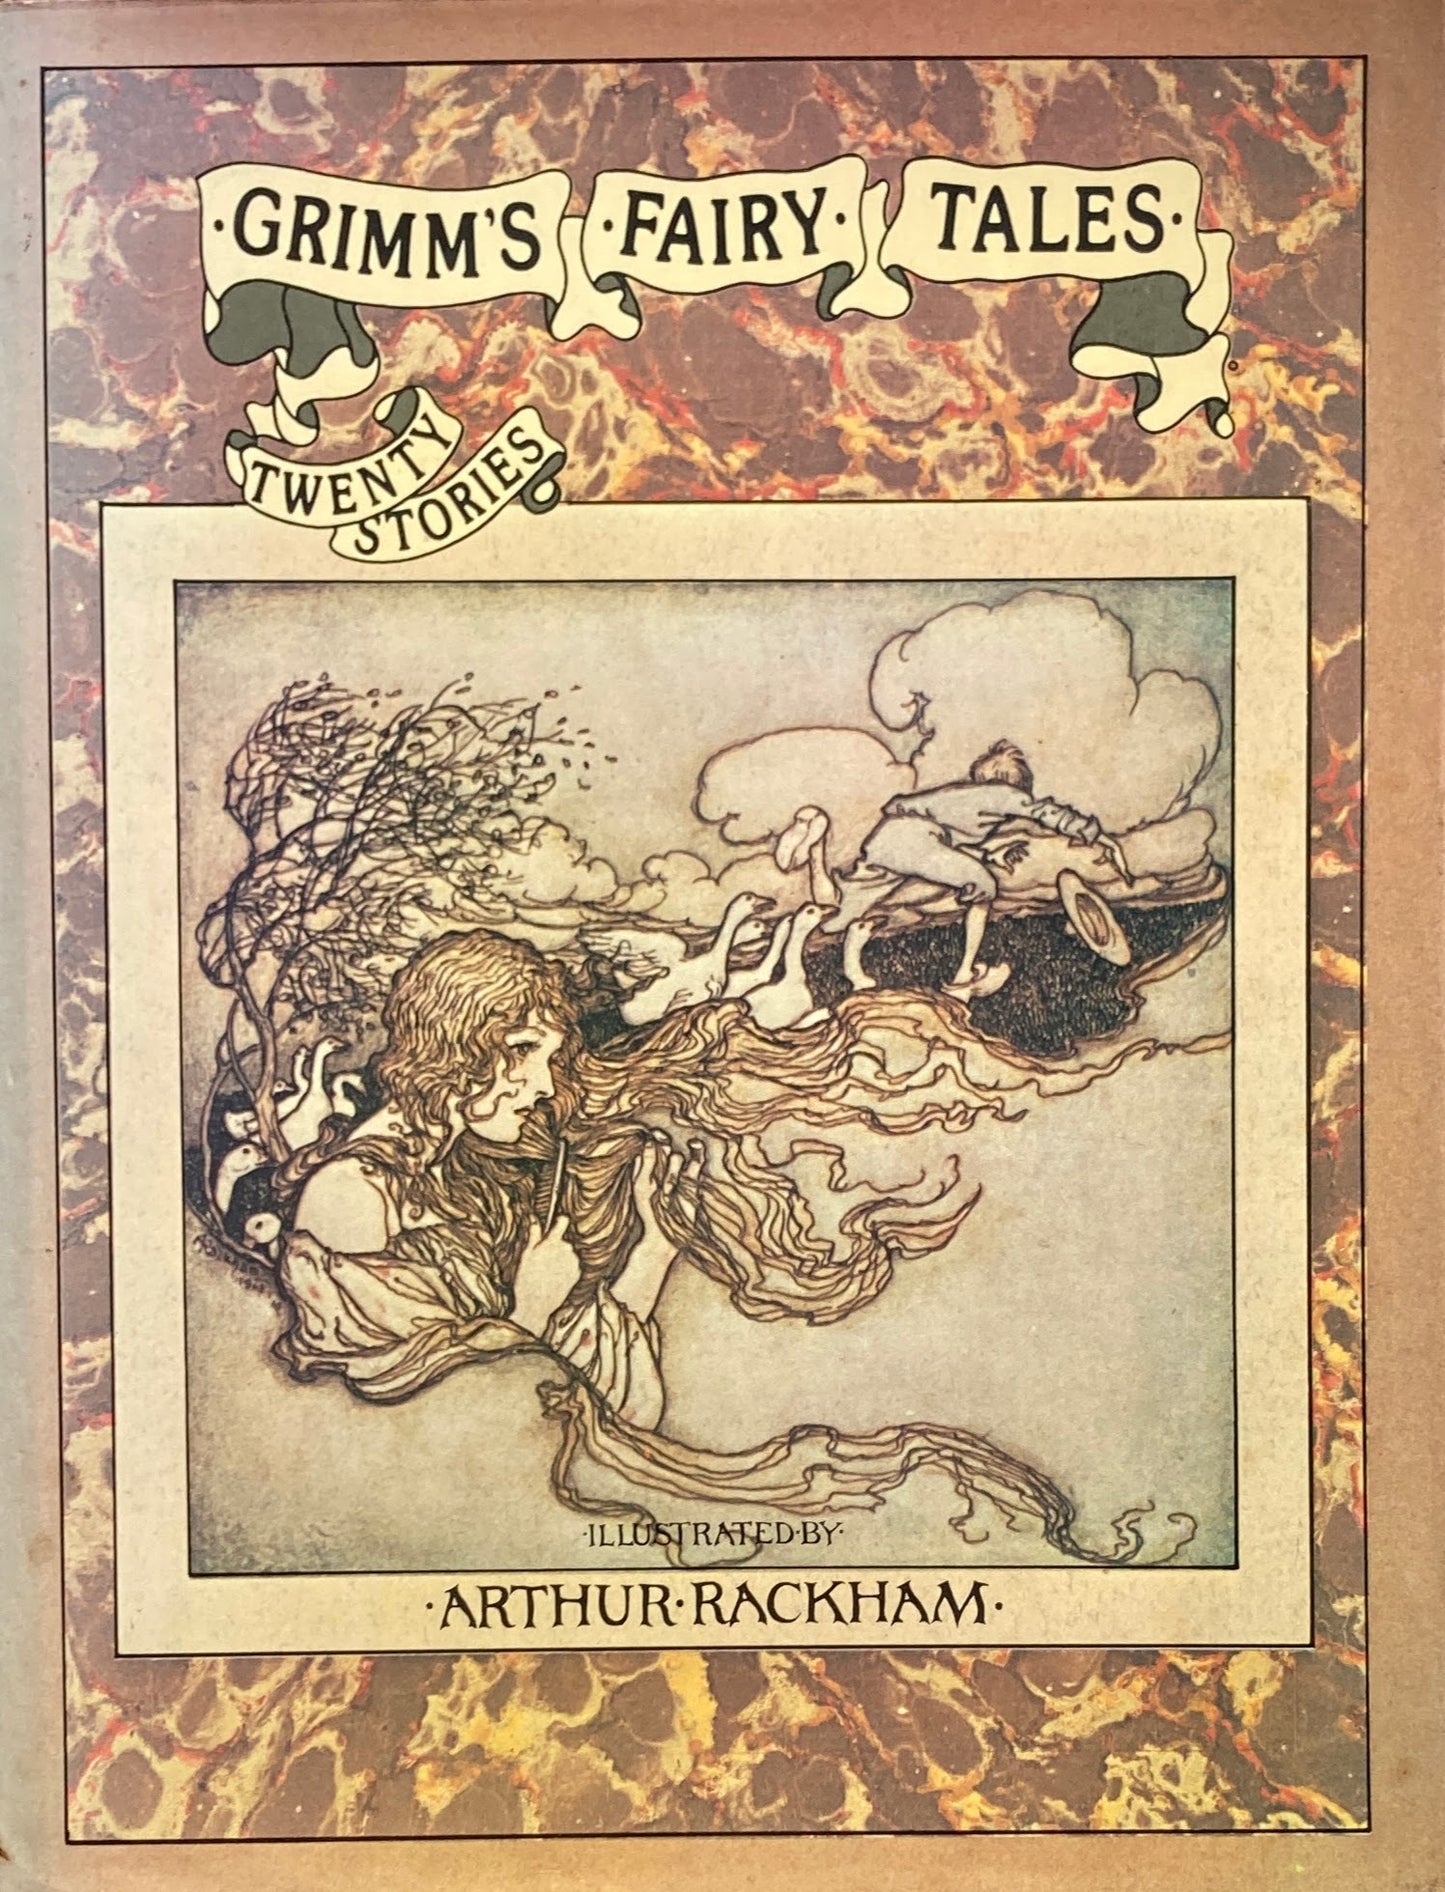 GRIMM'S FAIRY TALES Twenty Stories　Arthur Rackham　アーサー・ラッカム　